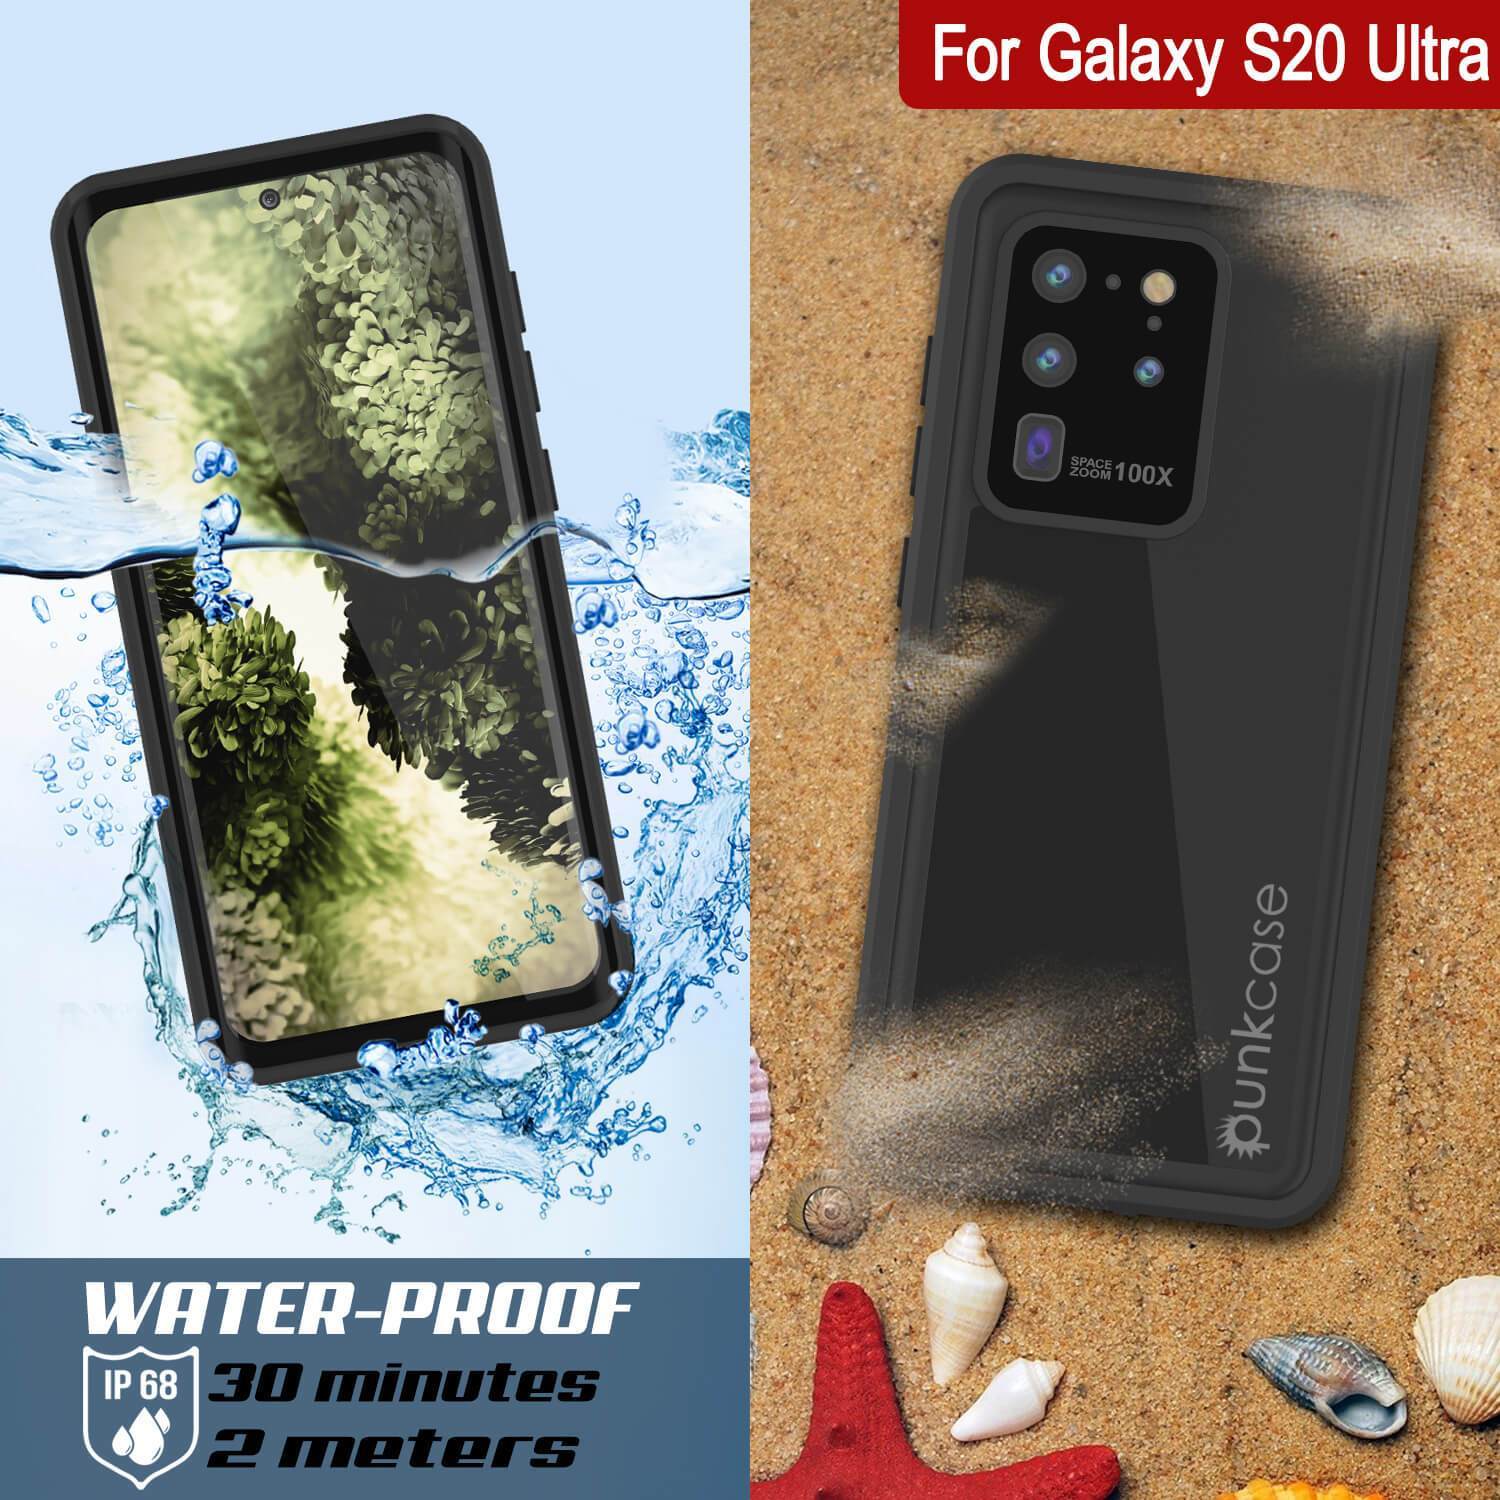 Galaxy S20 Ultra Waterproof Case PunkCase StudStar Red Thin 6.6ft Underwater IP68 Shock/Snow Proof